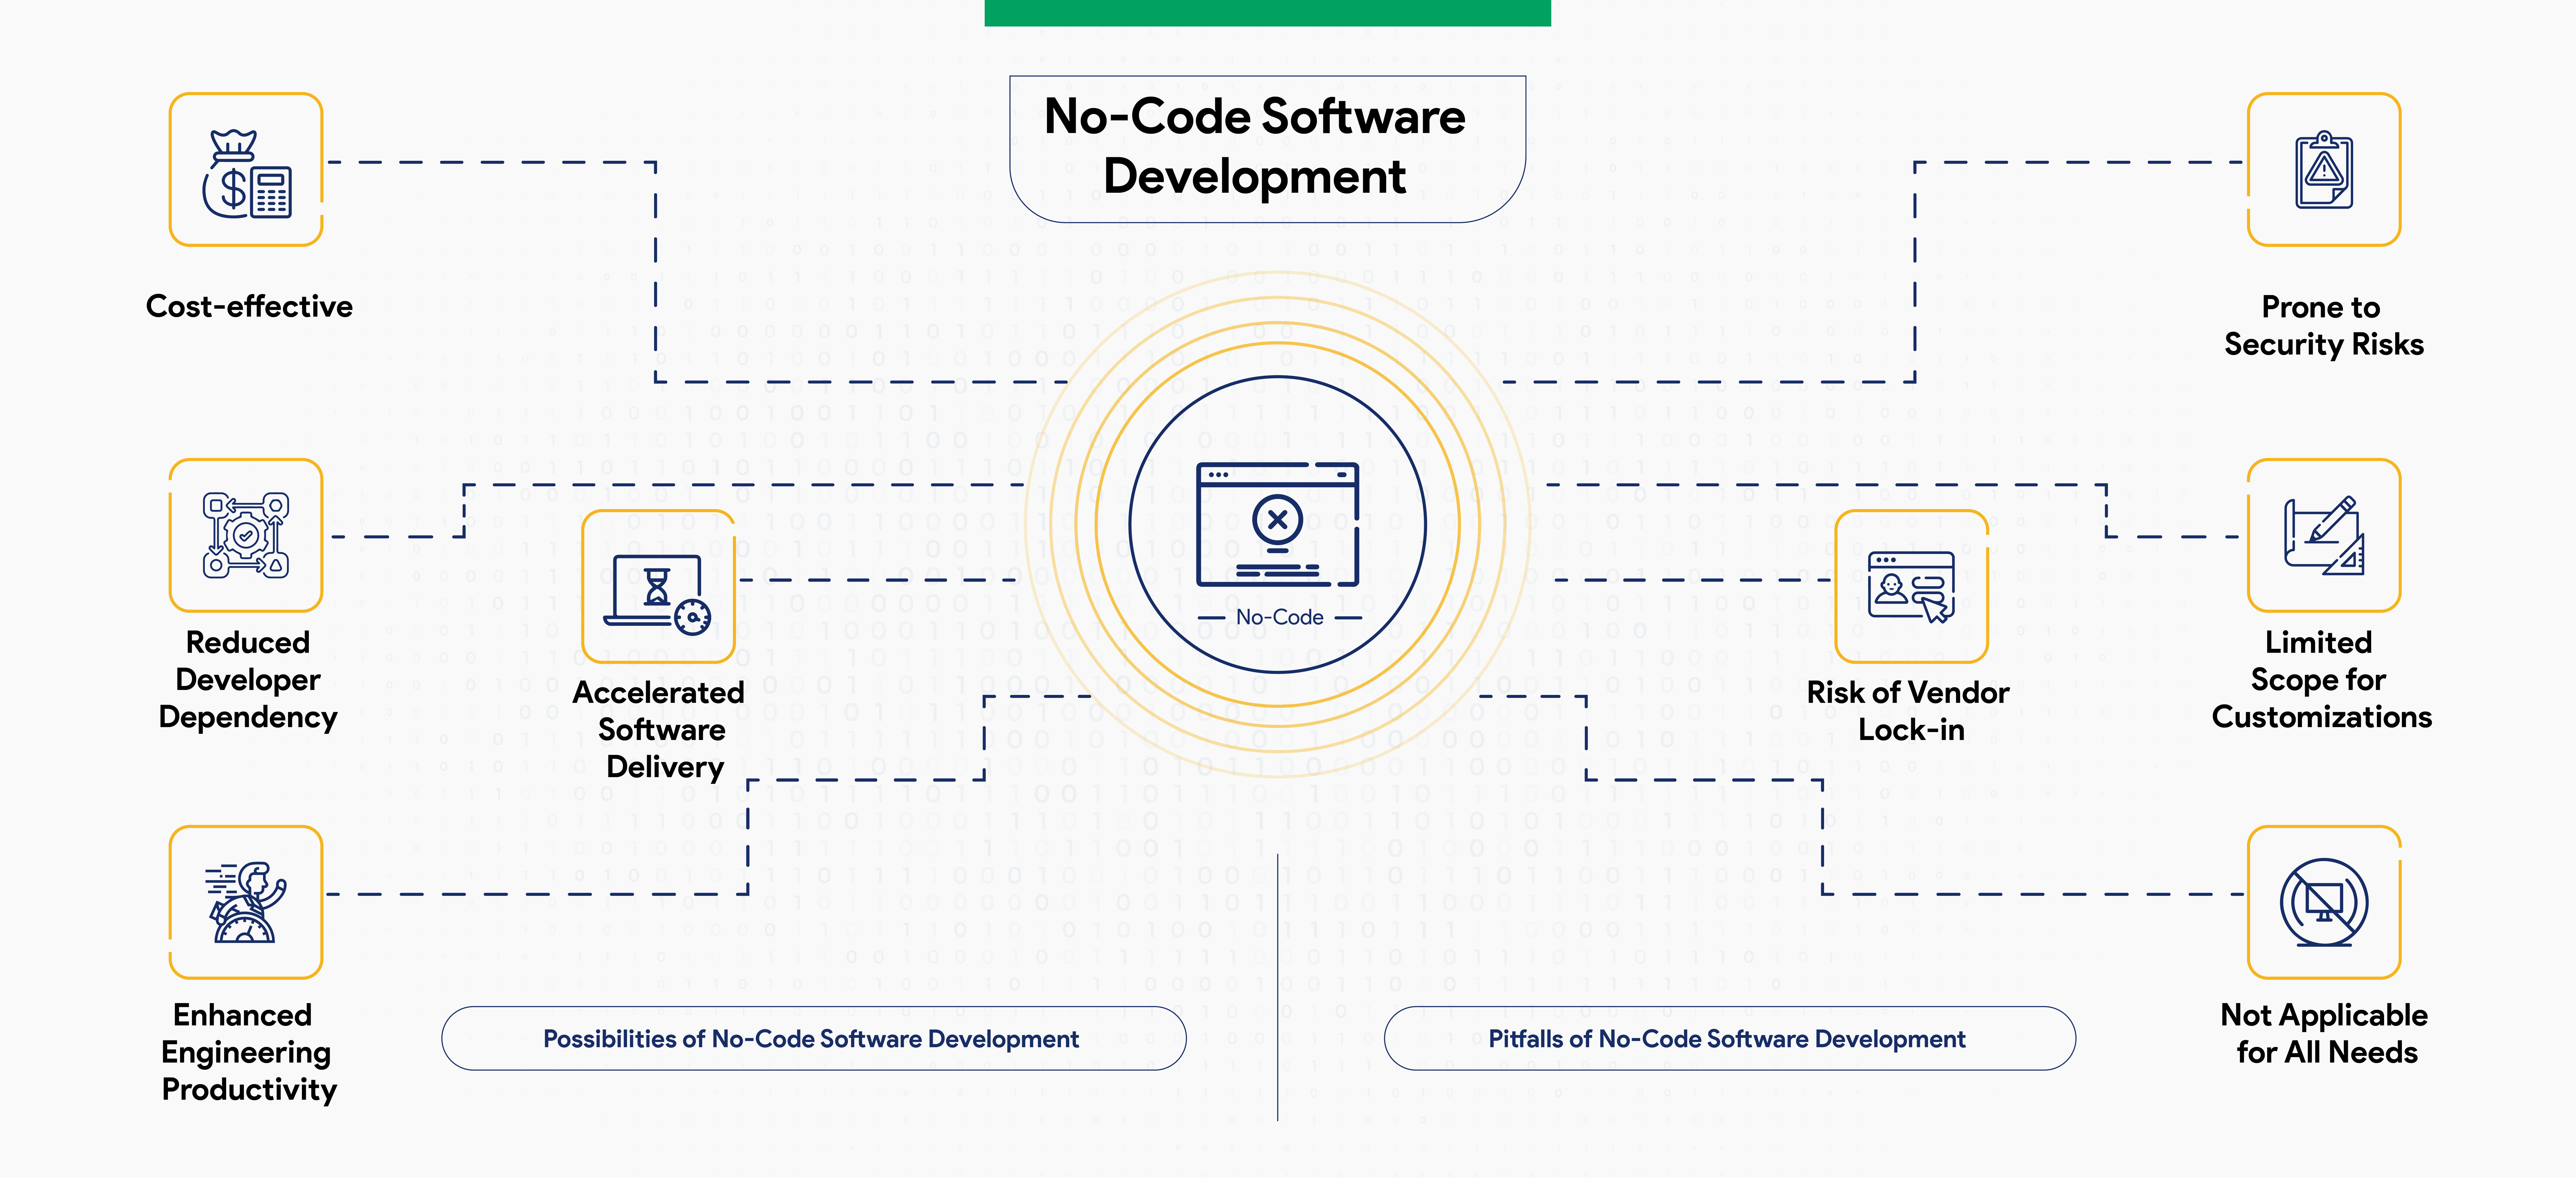 No-Code Software Development